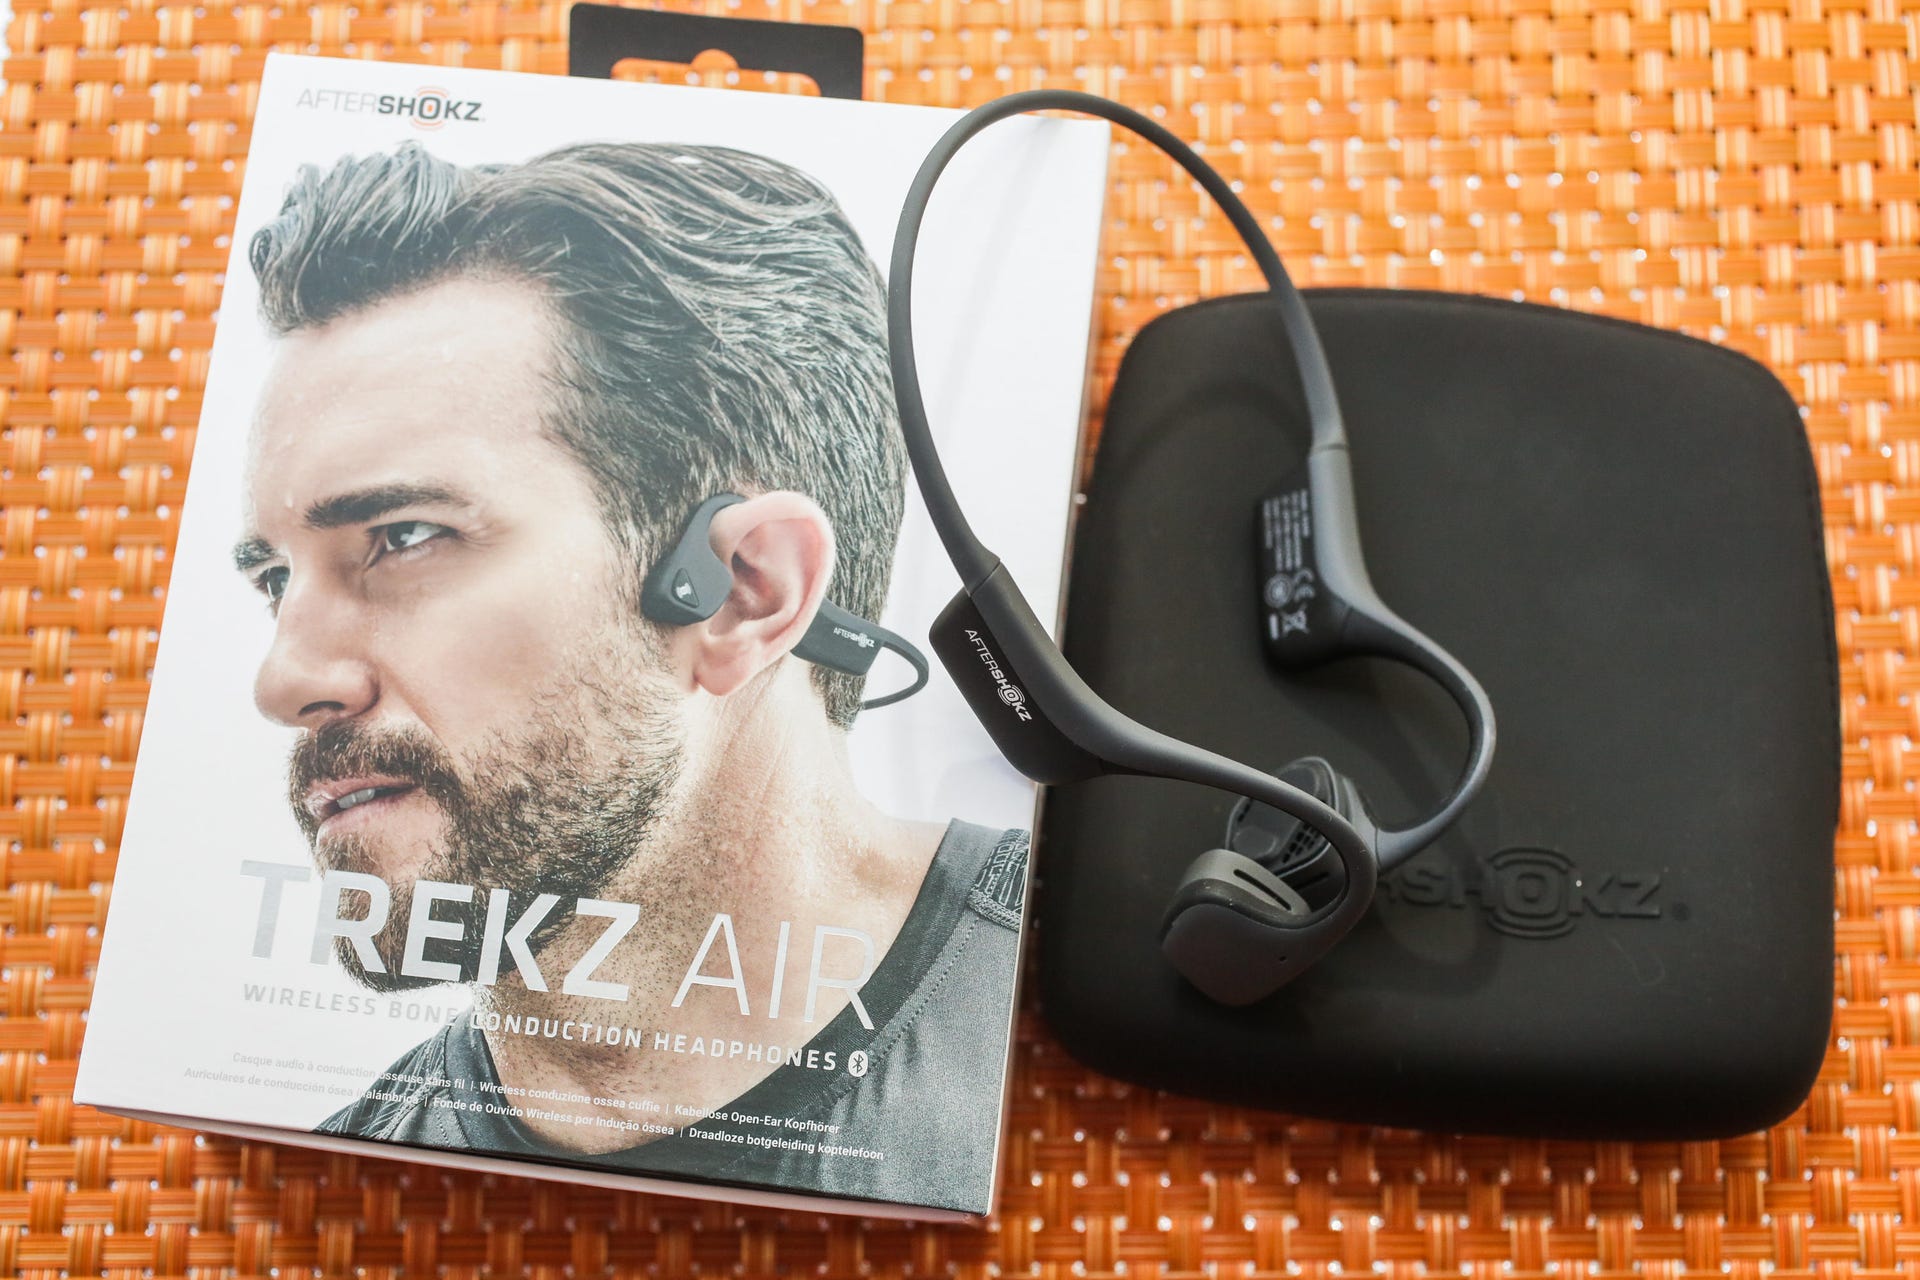 trekz-air-aftershokz-wireless-bone-conduction-headphones-02